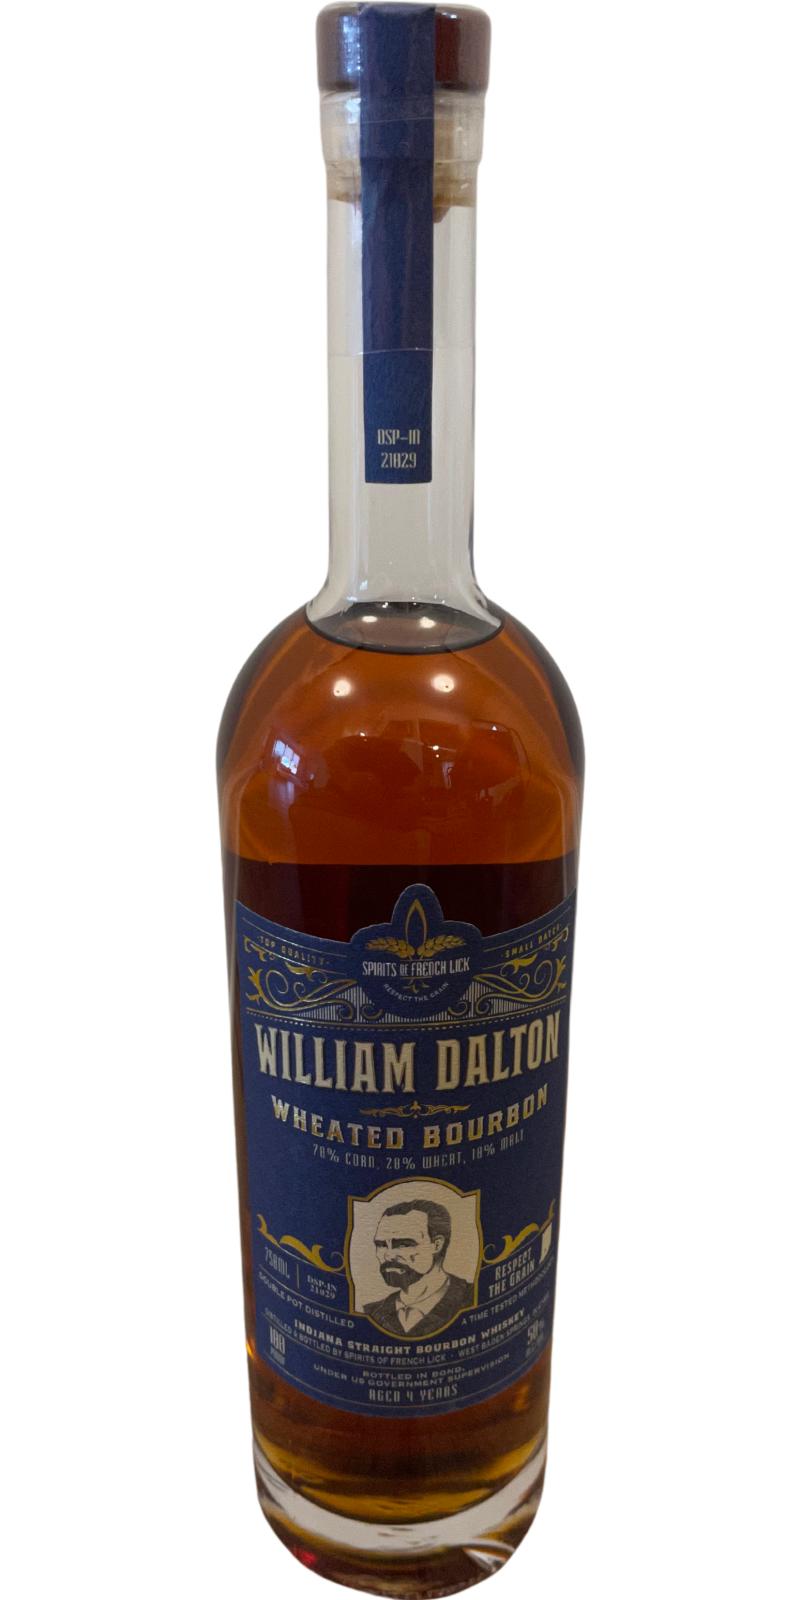 Spirits of French Lick 4yo William Dalton Wheated Bourbon 50% 750ml